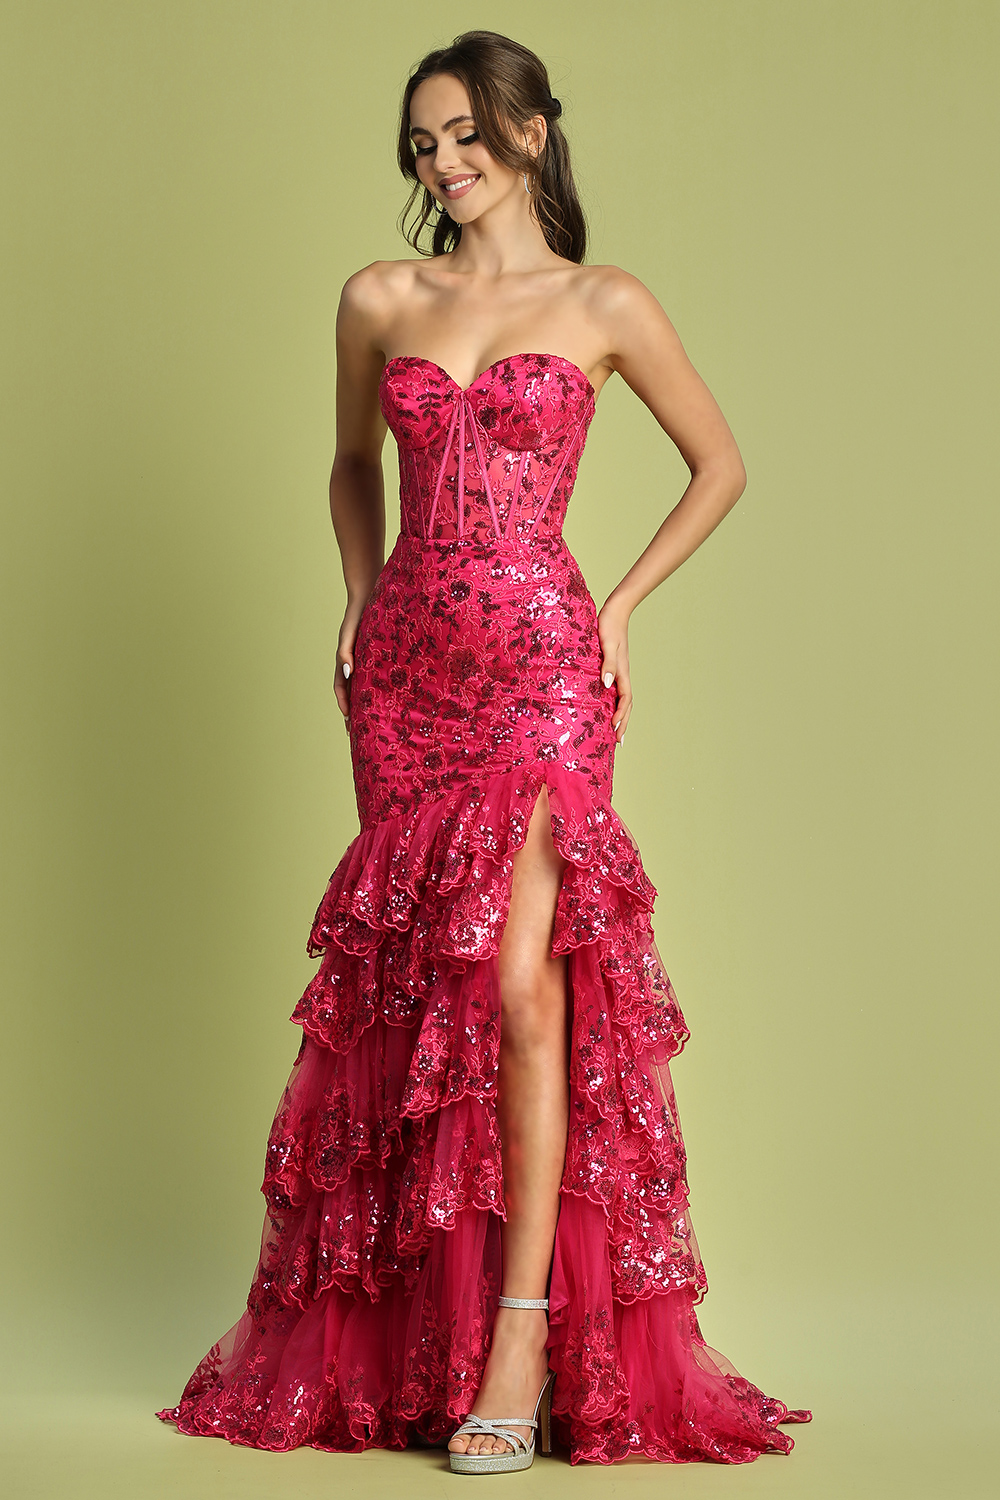 Strapless Sequin/Glitter Dress with Ruffle Skirt